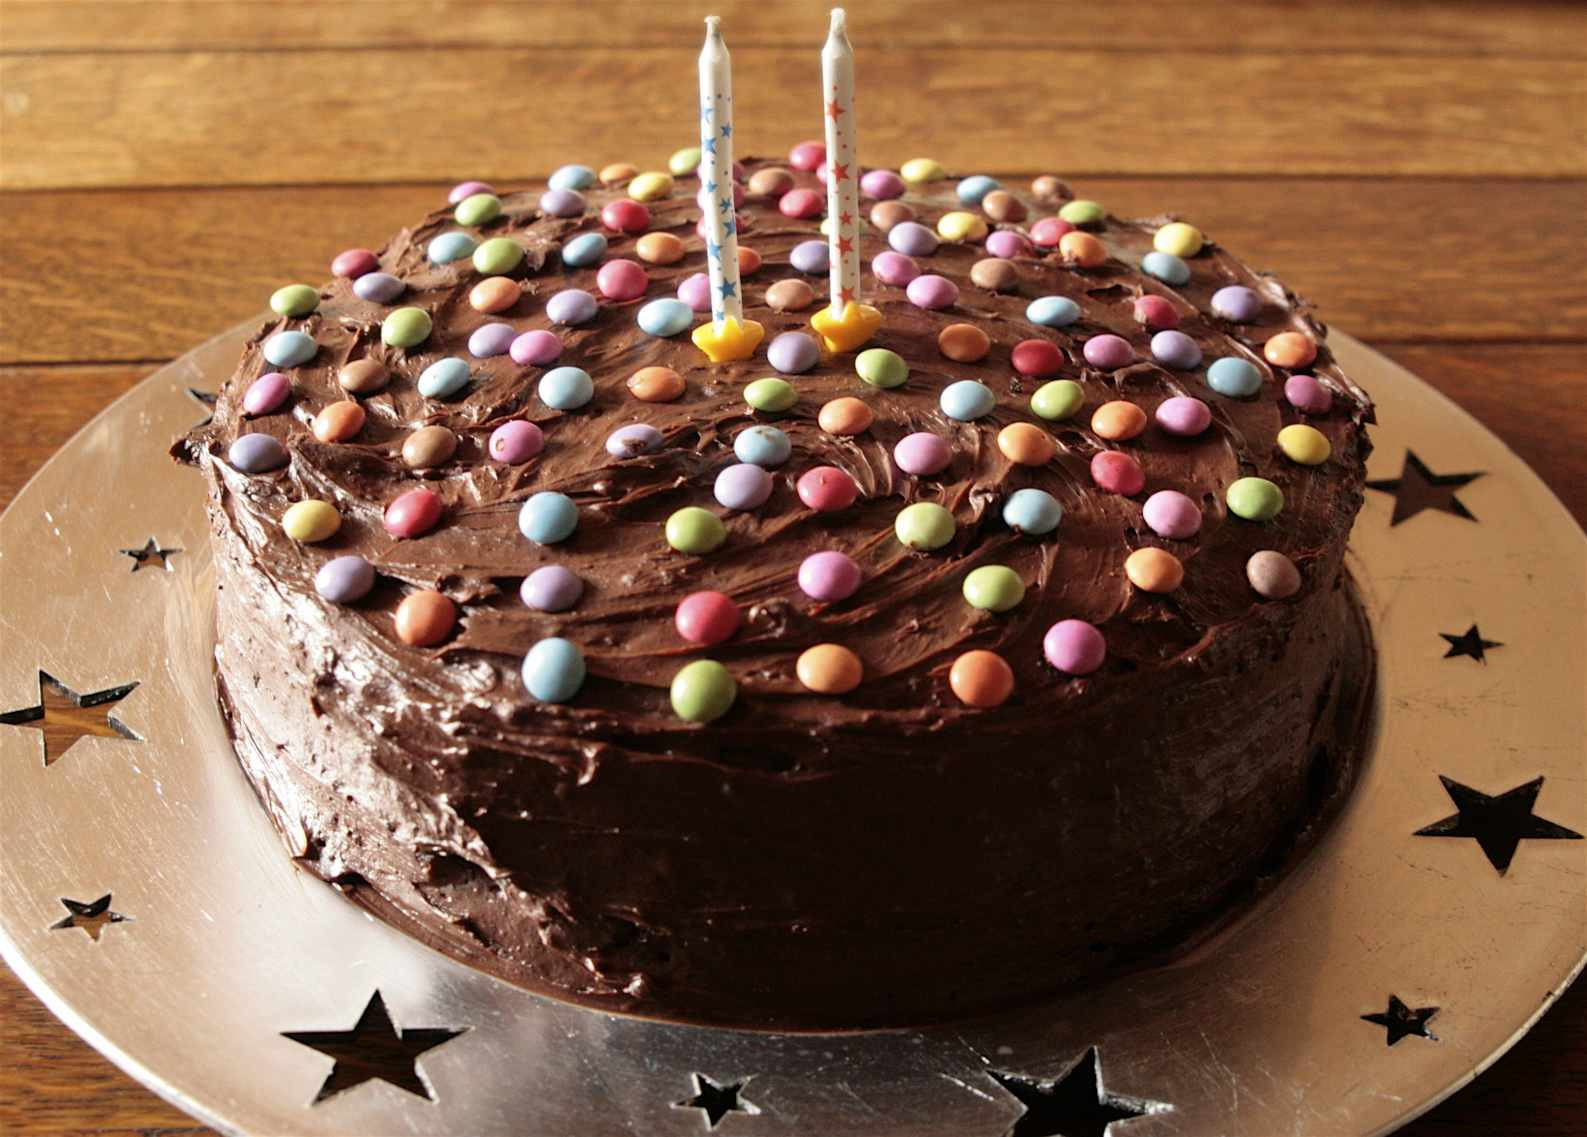 Best ideas about Chocolate Cake Birthday
. Save or Pin Chocolate Birthday Cake Now.